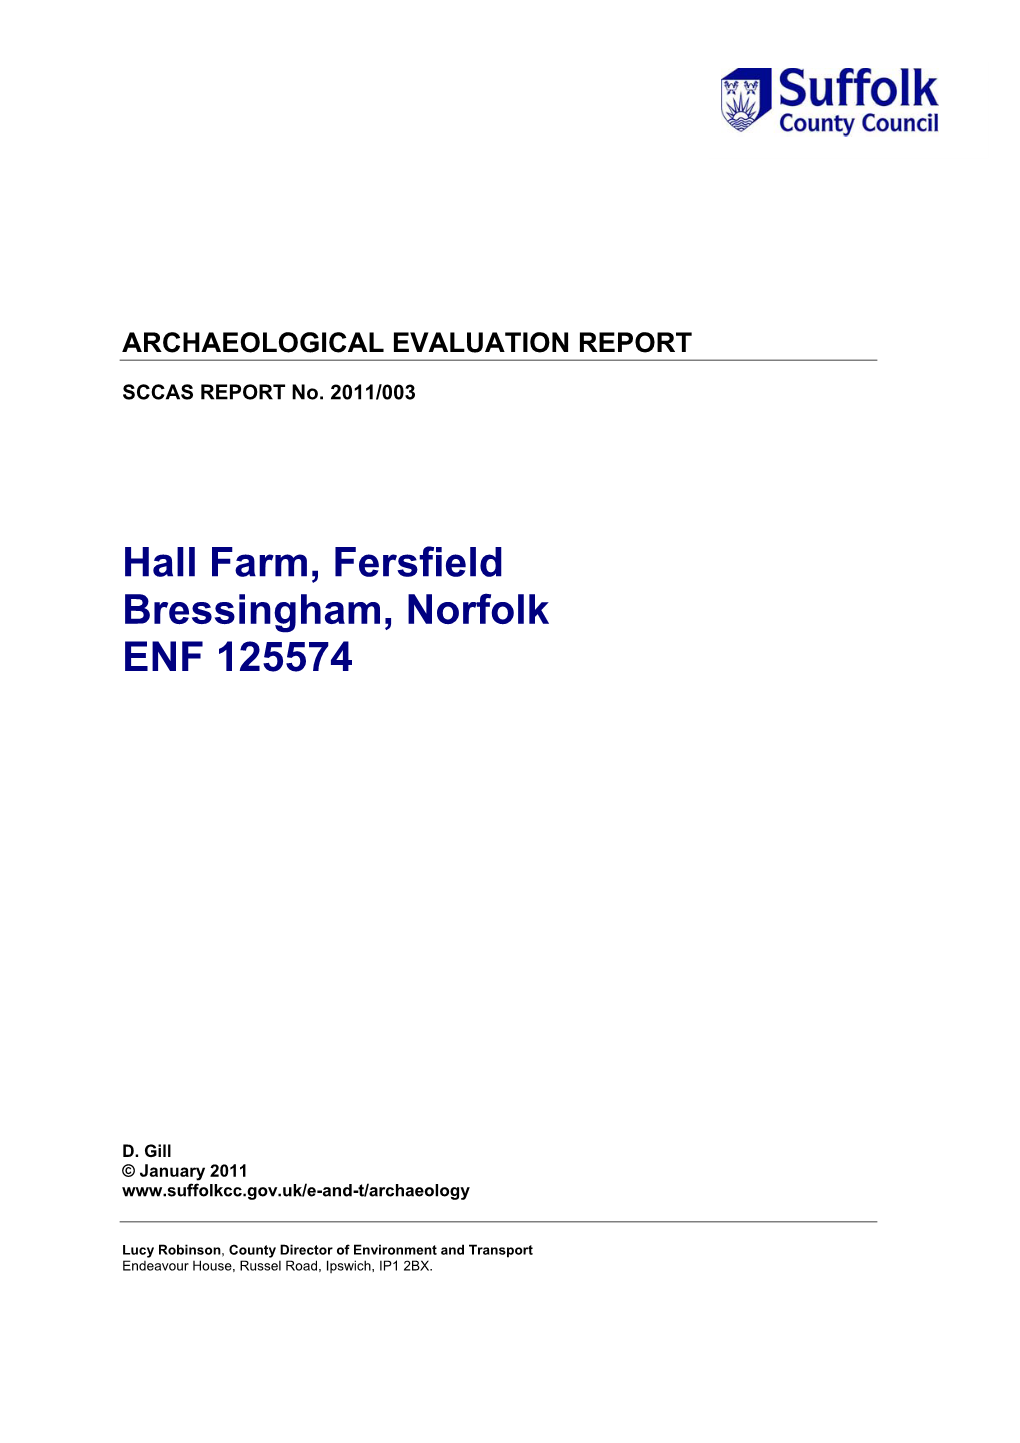 Hall Farm, Fersfield Bressingham, Norfolk ENF 125574